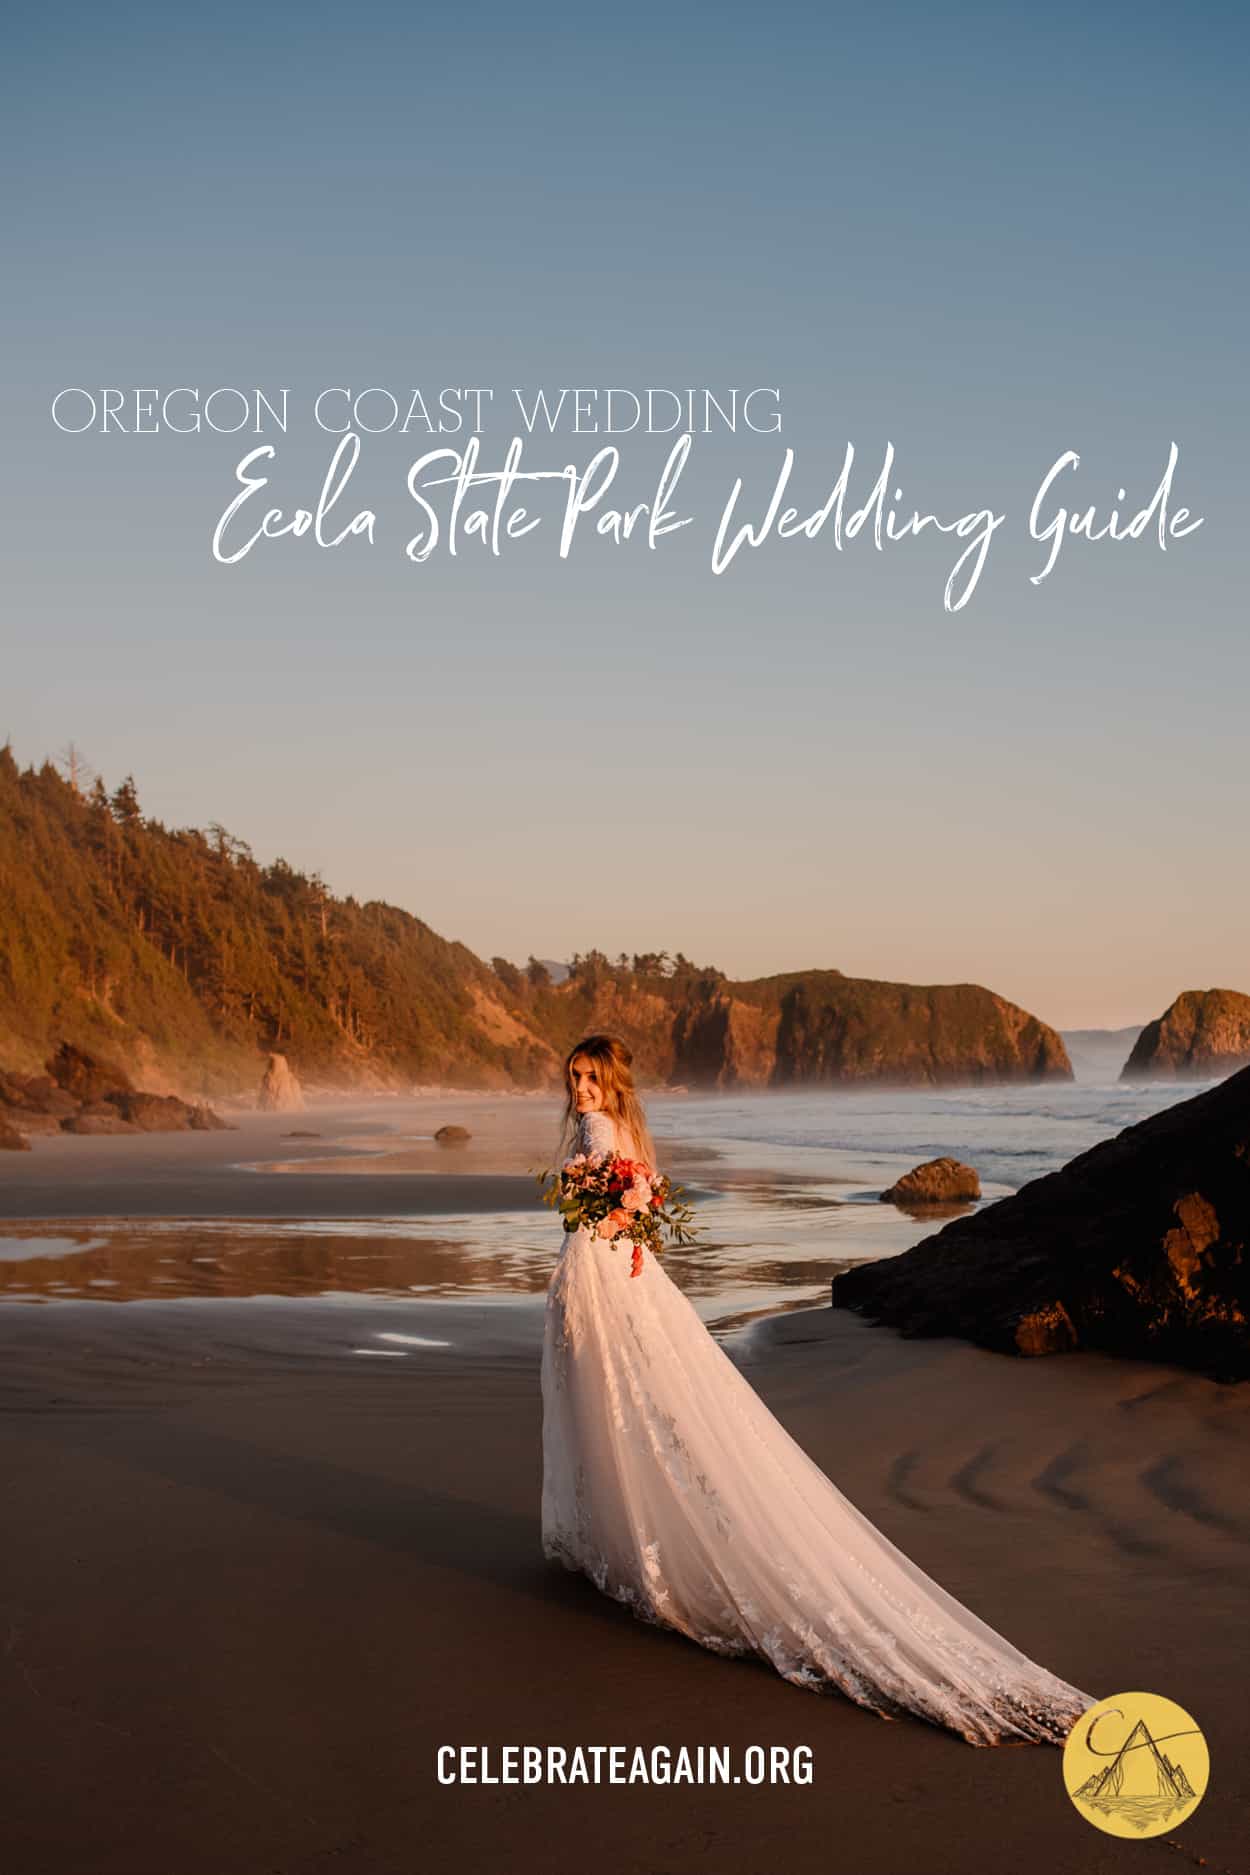 "oregon coast wedding ecola state park wedding guide" bride on beach with sun lighting her up